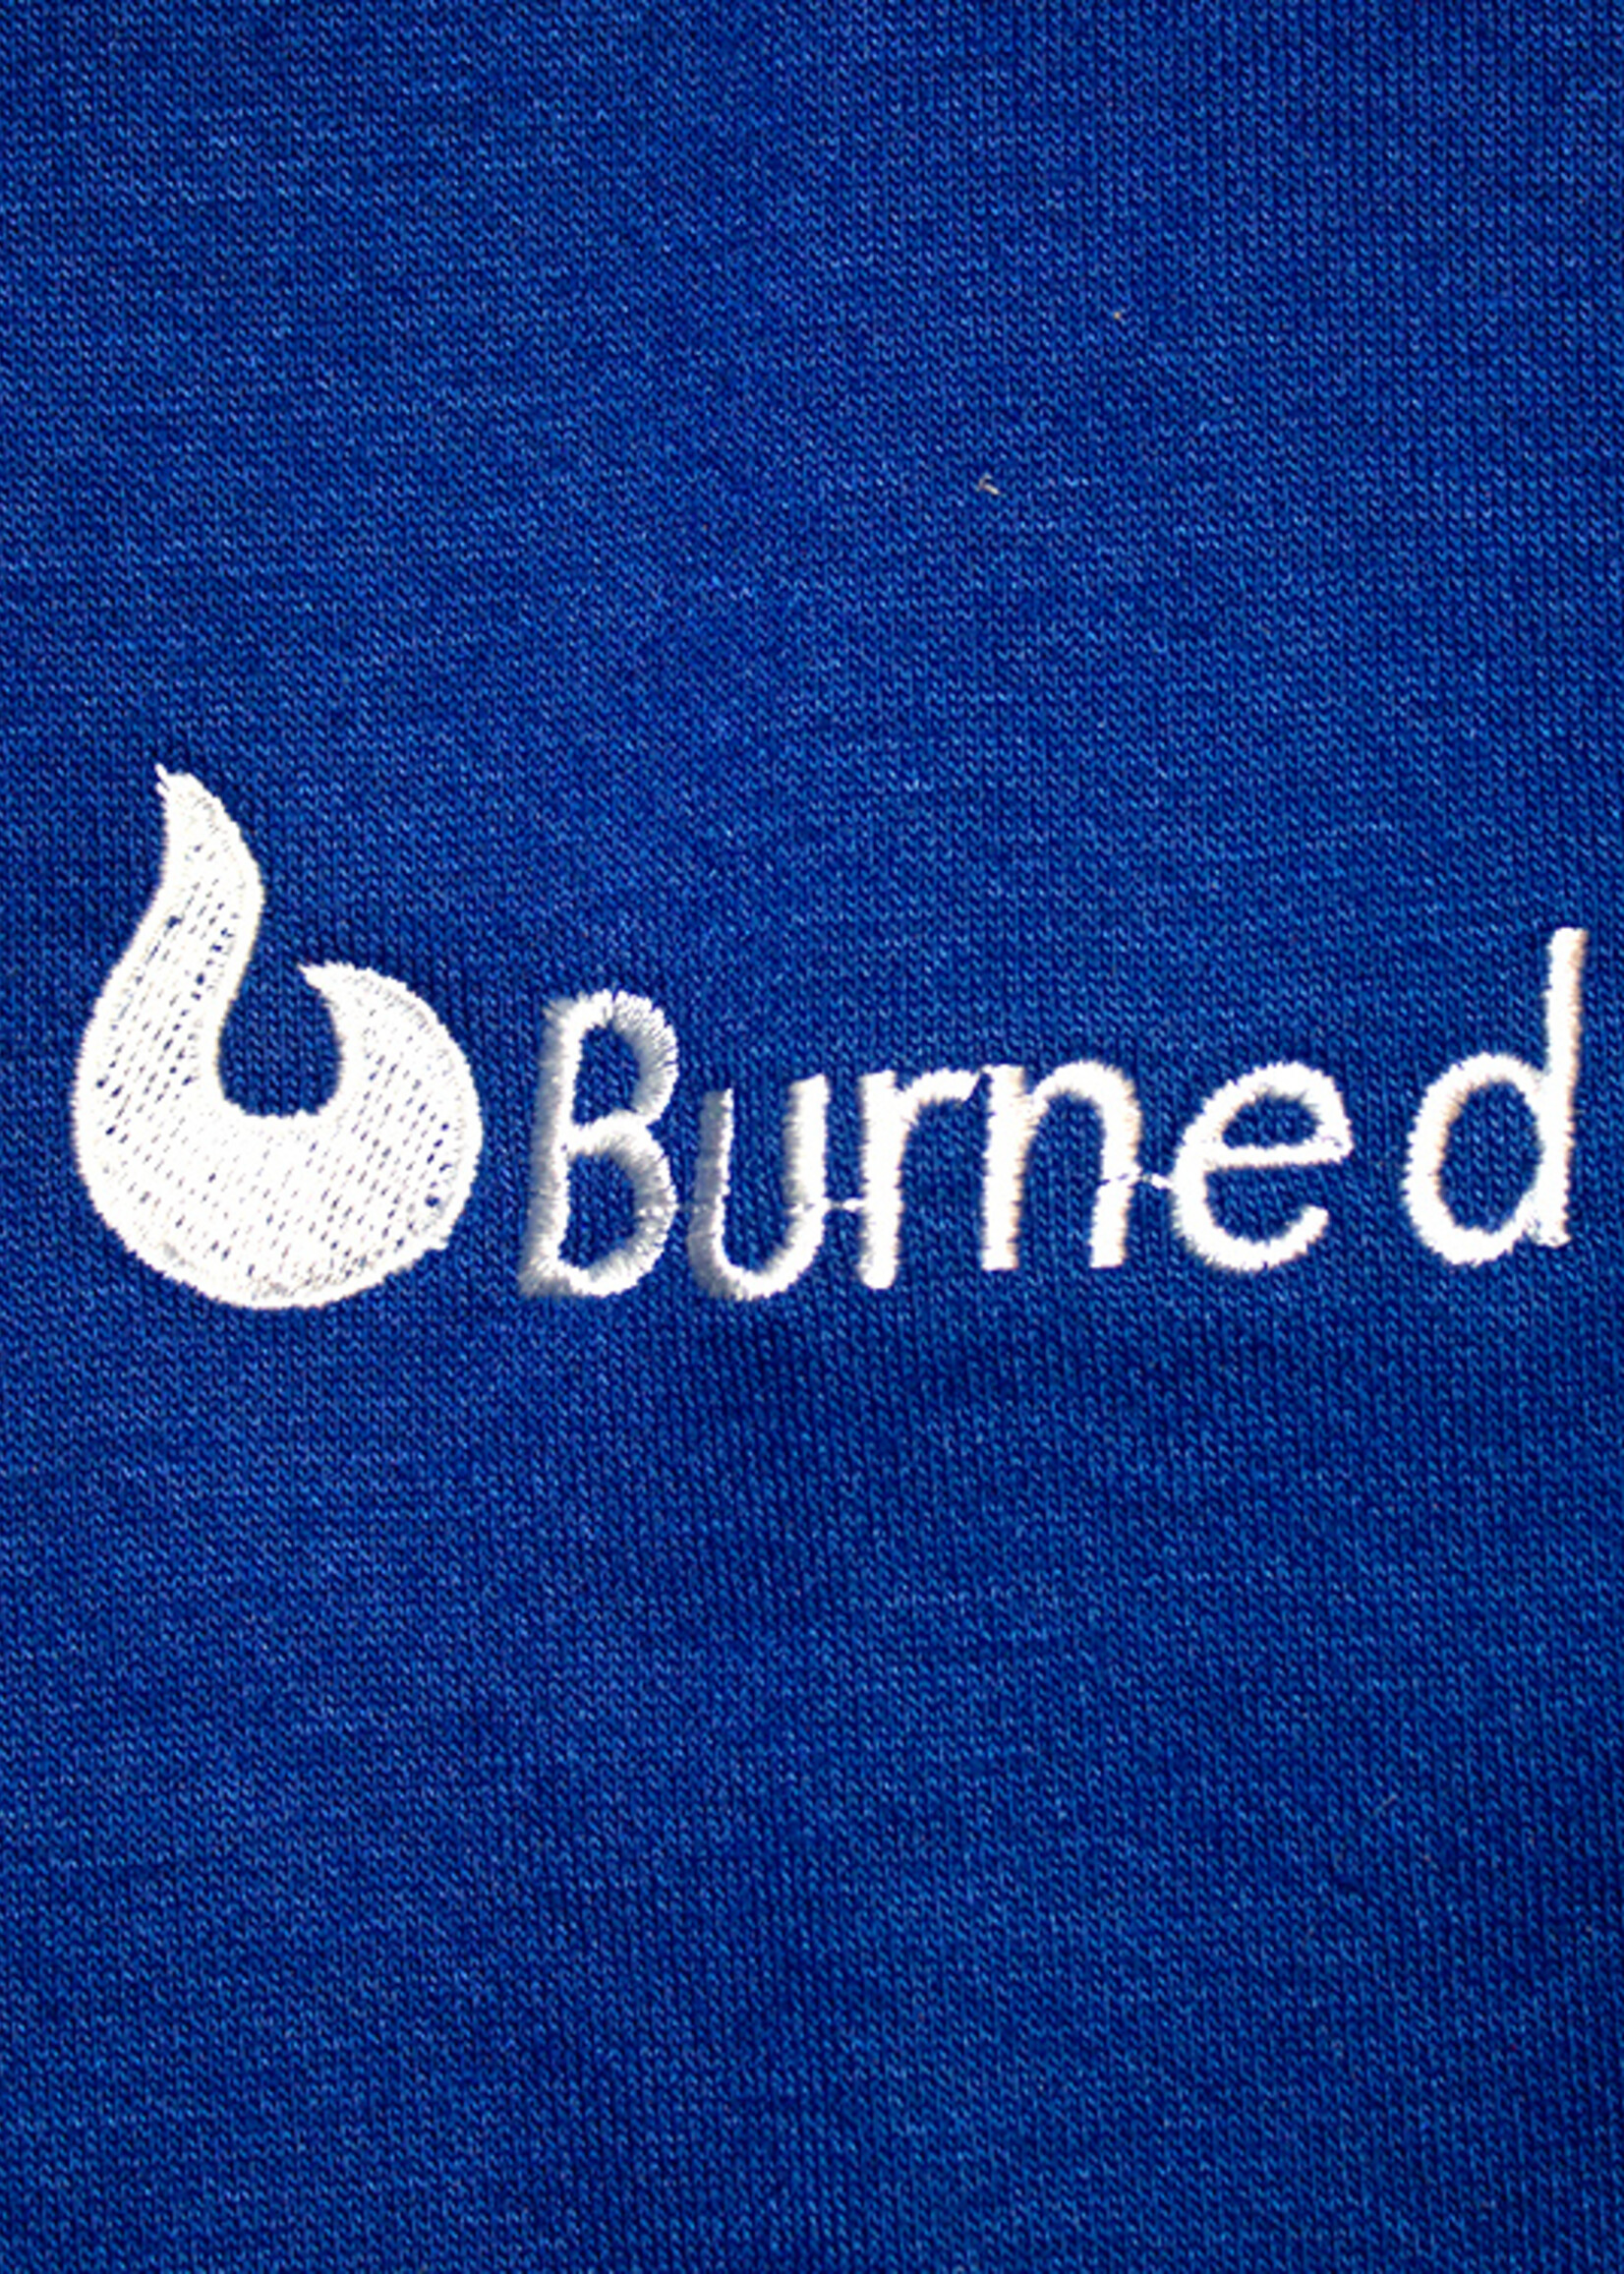 Burned Burned Crewneck Royal Blauw